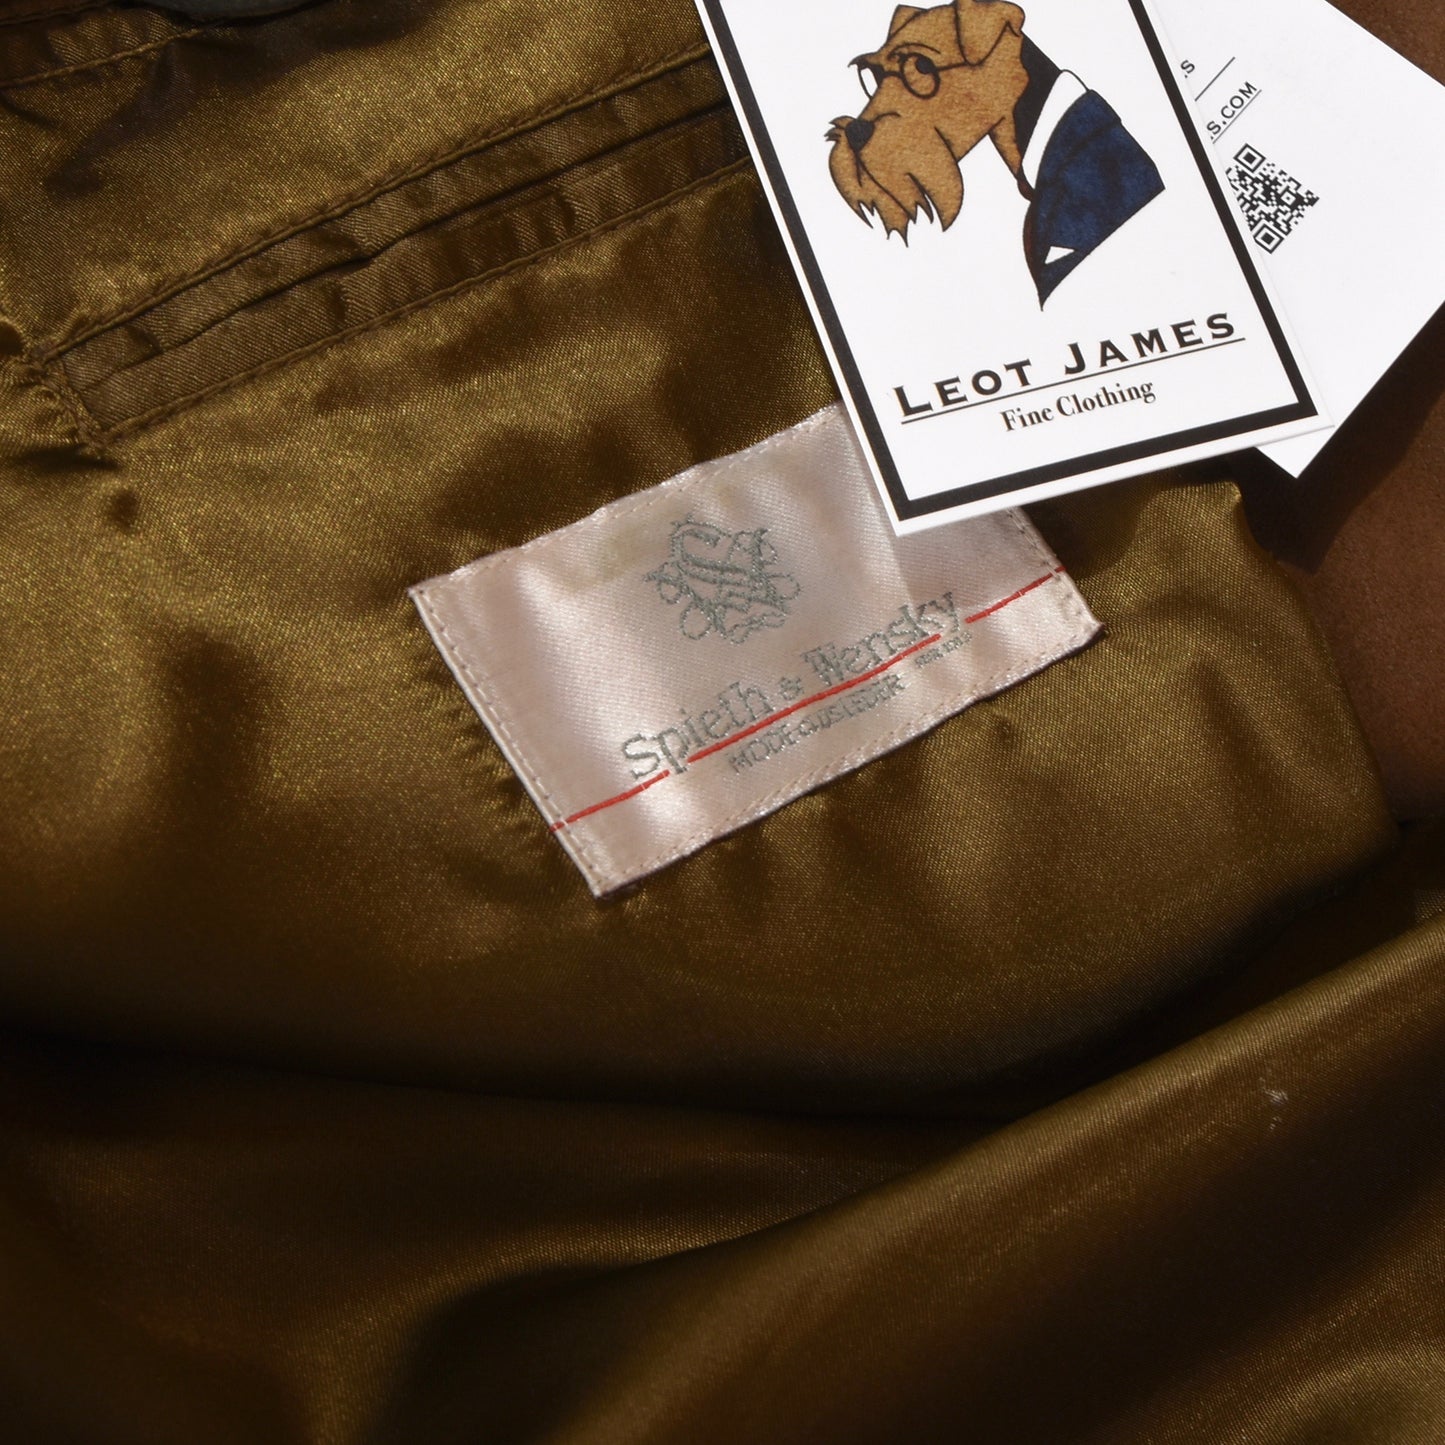 Spieth & Wensky Genuine Leather Janker/Jacket Size 56 - Brown